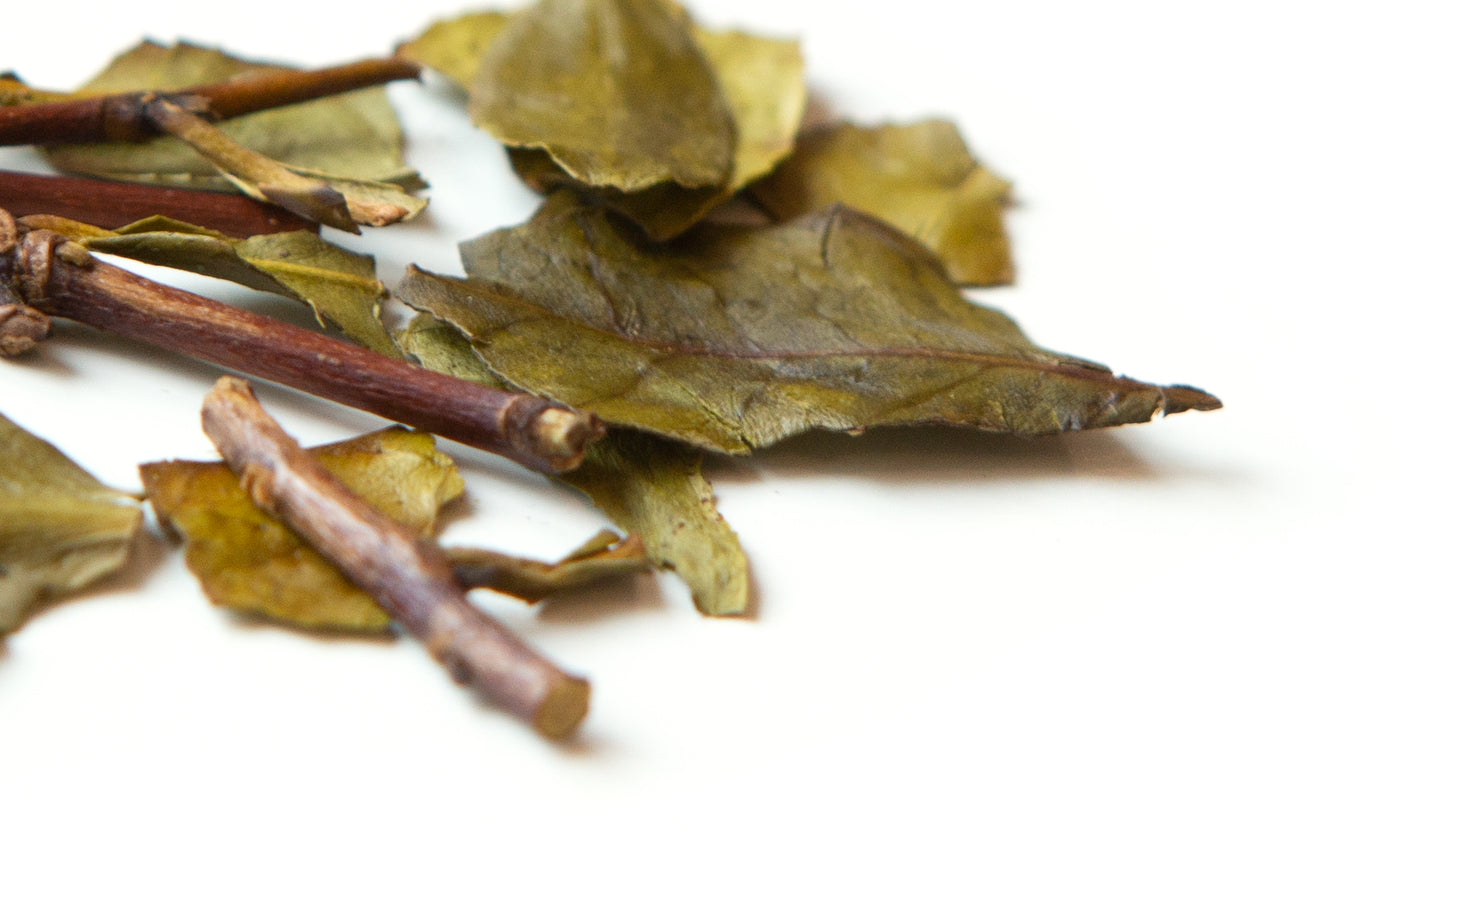 Branch tea from the Terrasses de l'Arrieulat